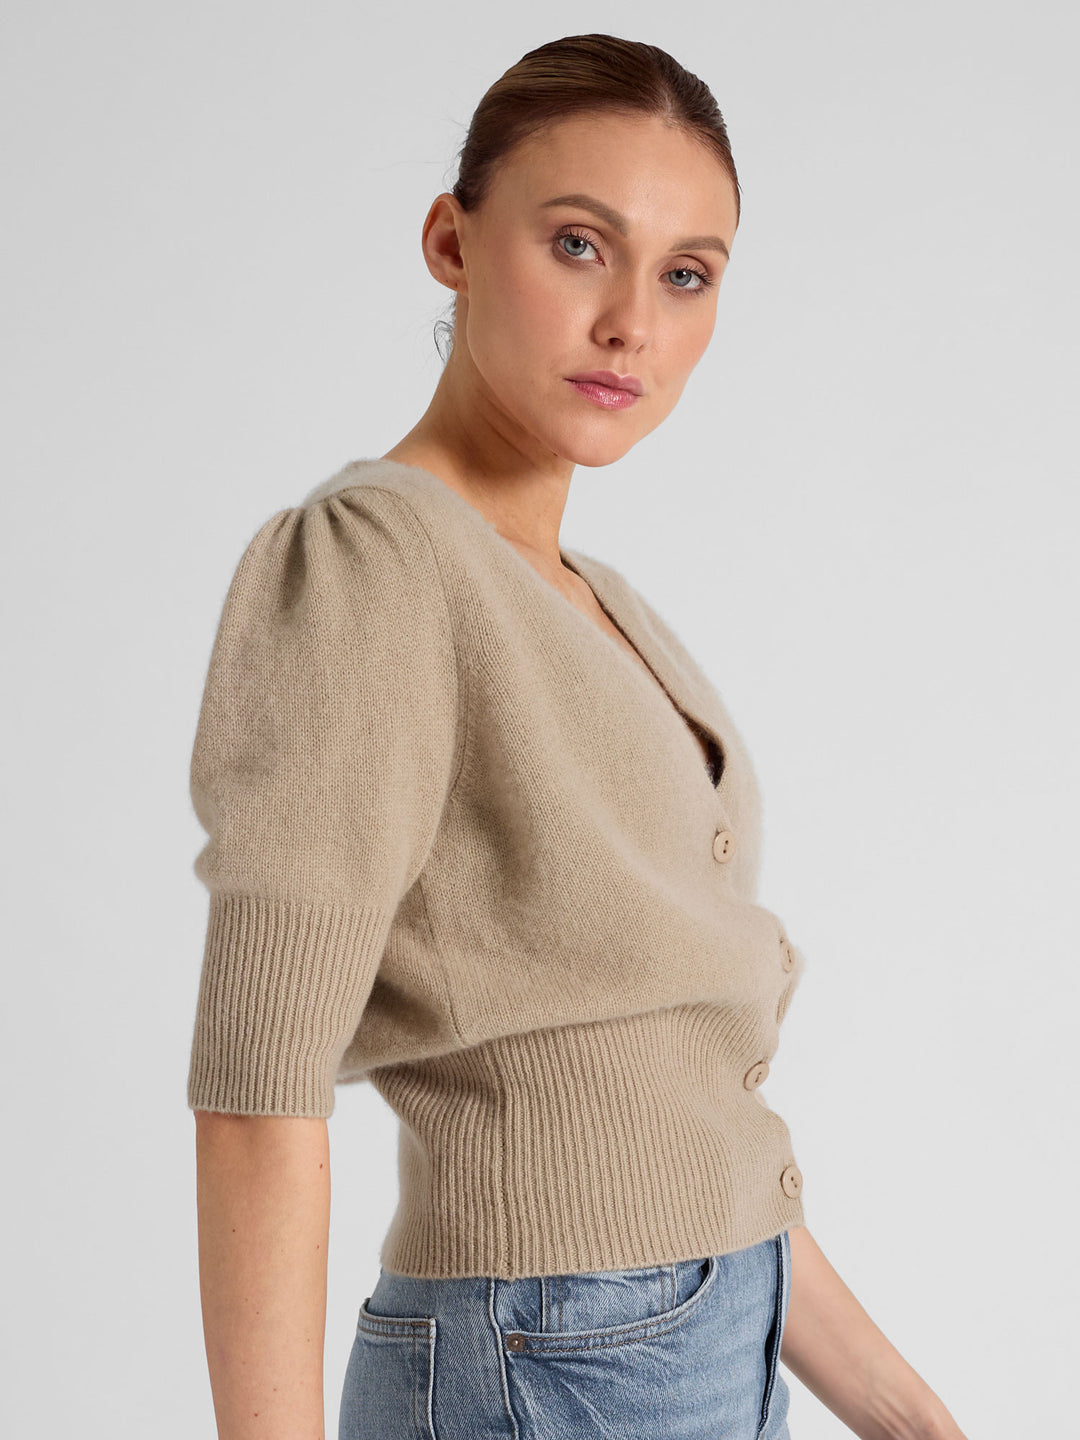 Cashmere cardigan "Grace" in 100% pure cashmere. Scandinavian design by Kashmina. Color: Sand.